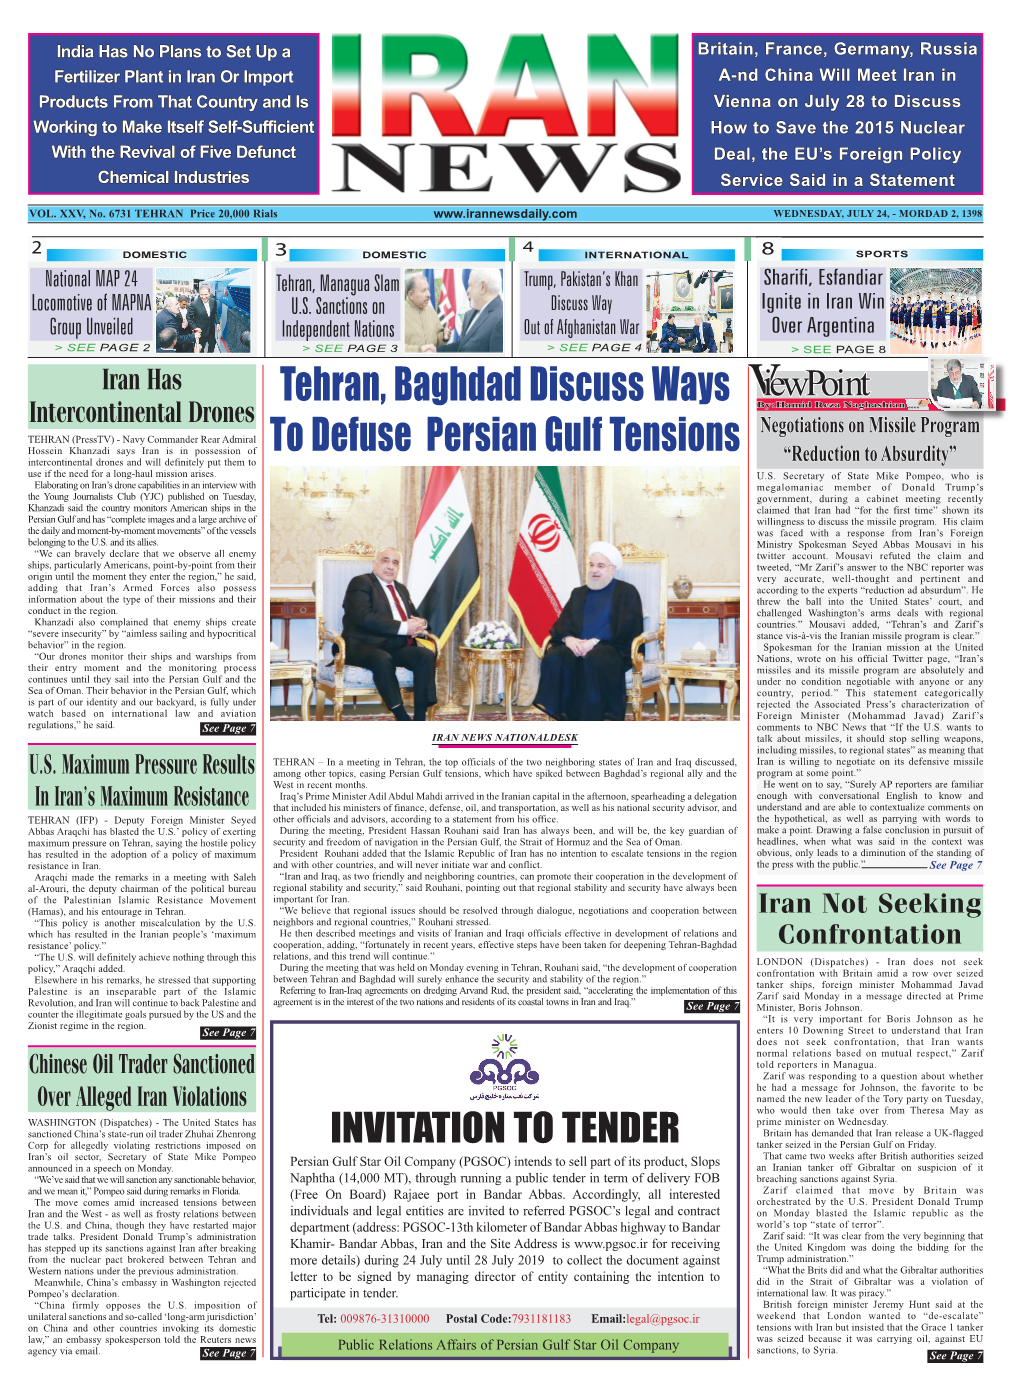 Tehran, Baghdad Discuss Ways to Defuse Persian Gulf Tensions